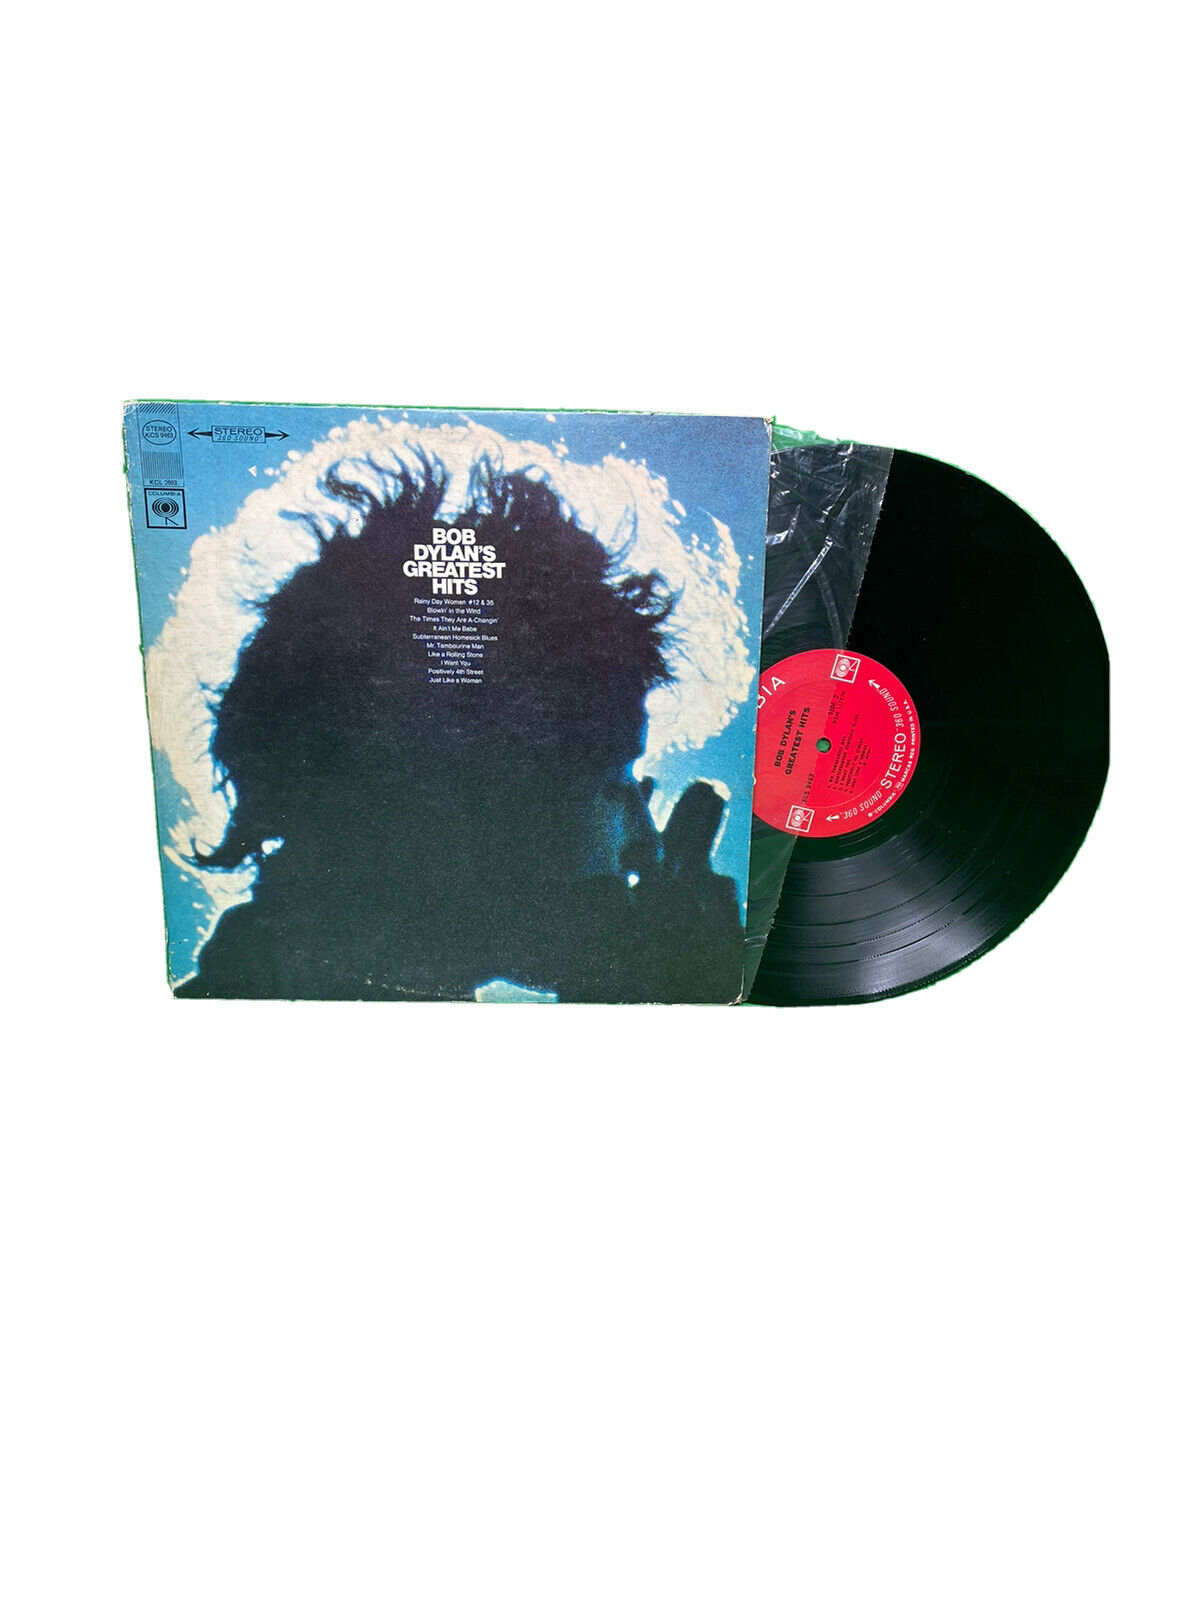 Bob Dylans Greatest Hits Vinyl Record 1967 Columbia JC 9463 LP classic G+ G +